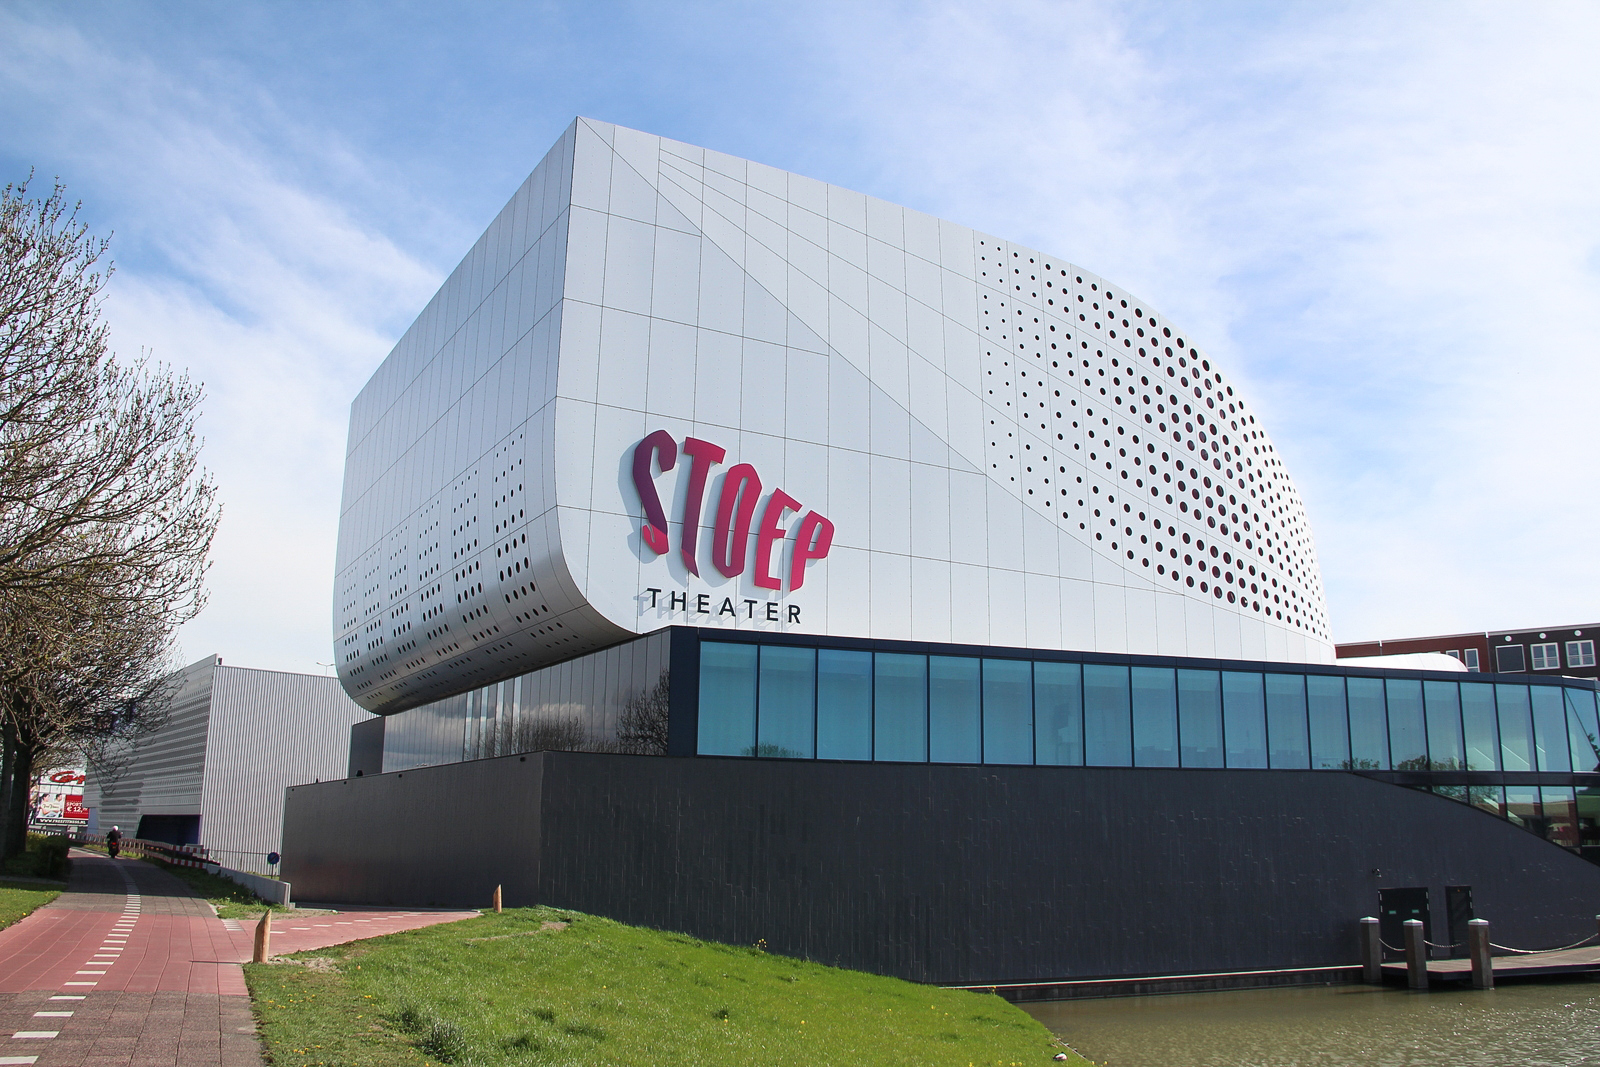 Theater de. Theatre de stoep. Theatre de stoep / UNSTUDIO план. Спейкениссе. Theatre de kampanje, Нидерланды, 2015.